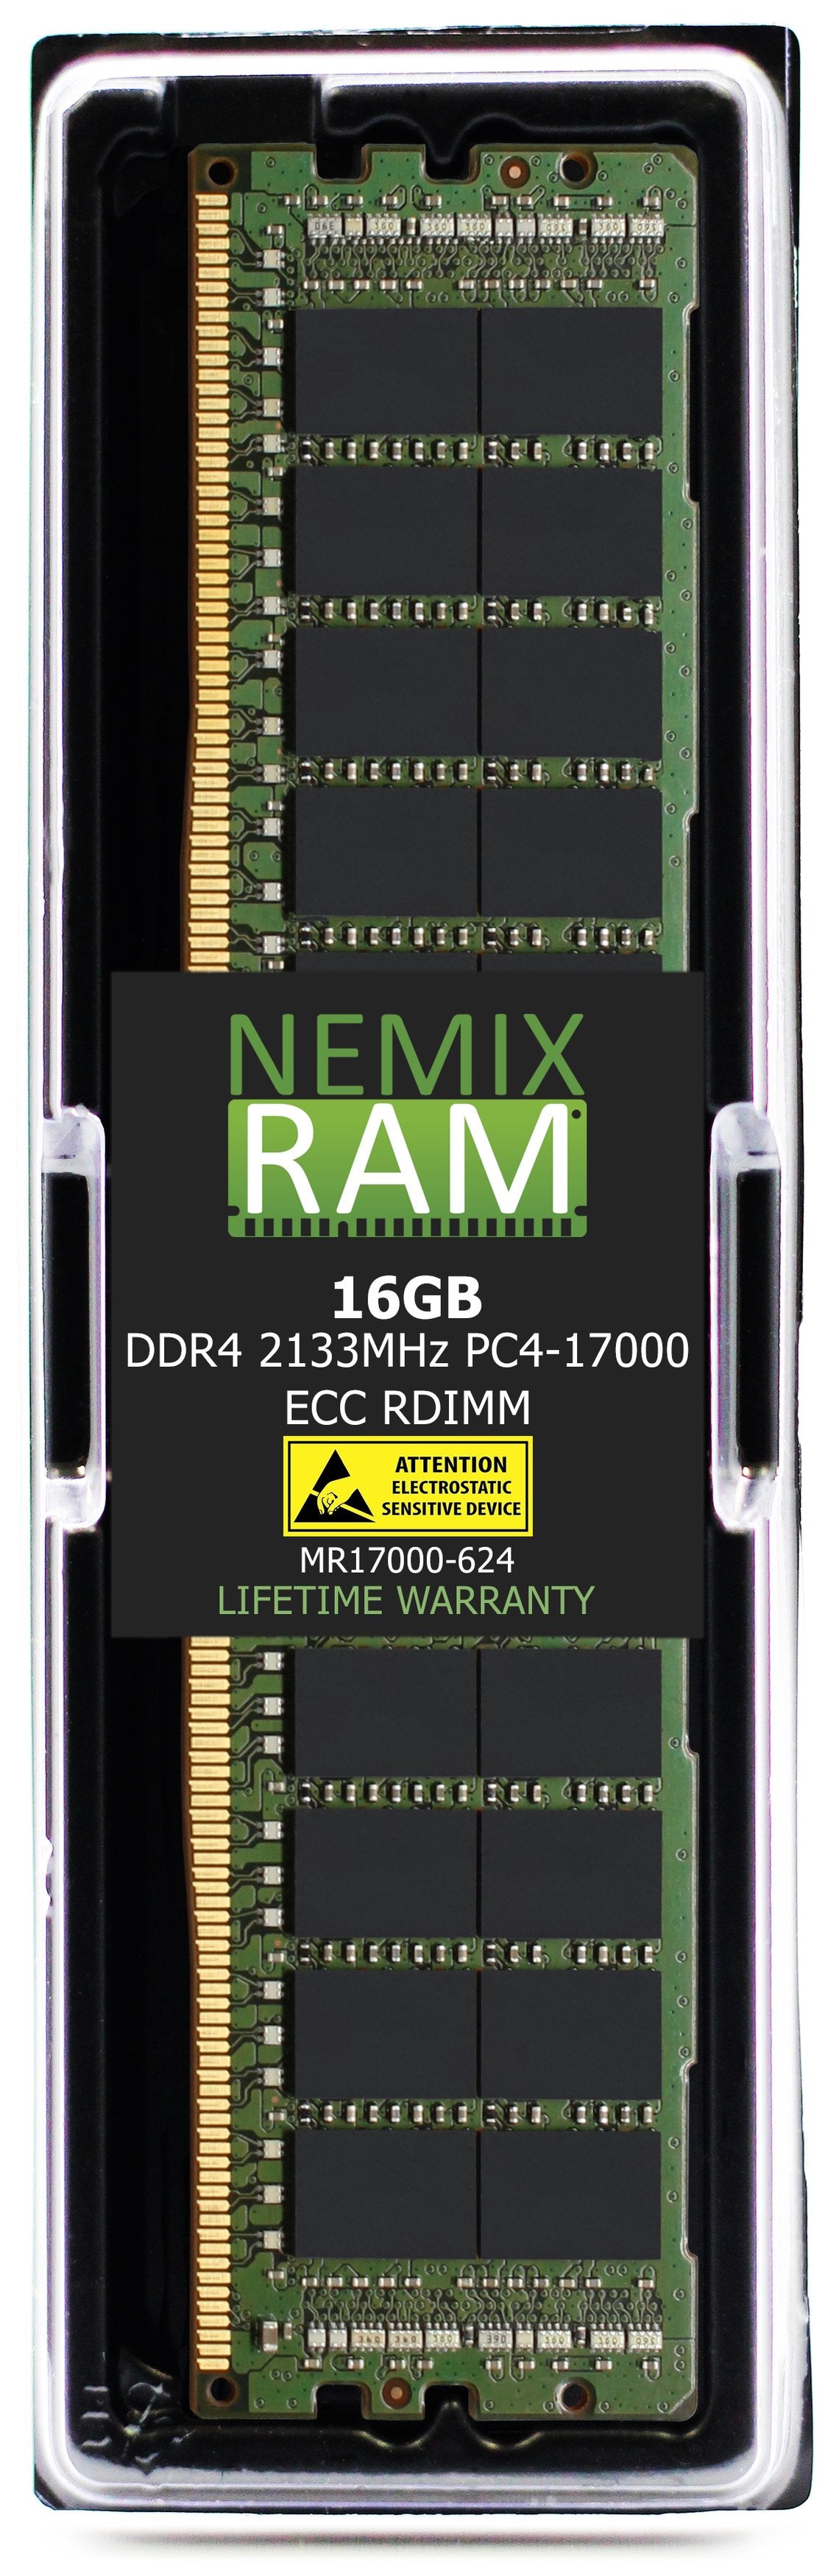 NEC Express5800 B120f Memory Module N8402-161F 16GB DDR4 2133MHZ PC4-17000 RDIMM